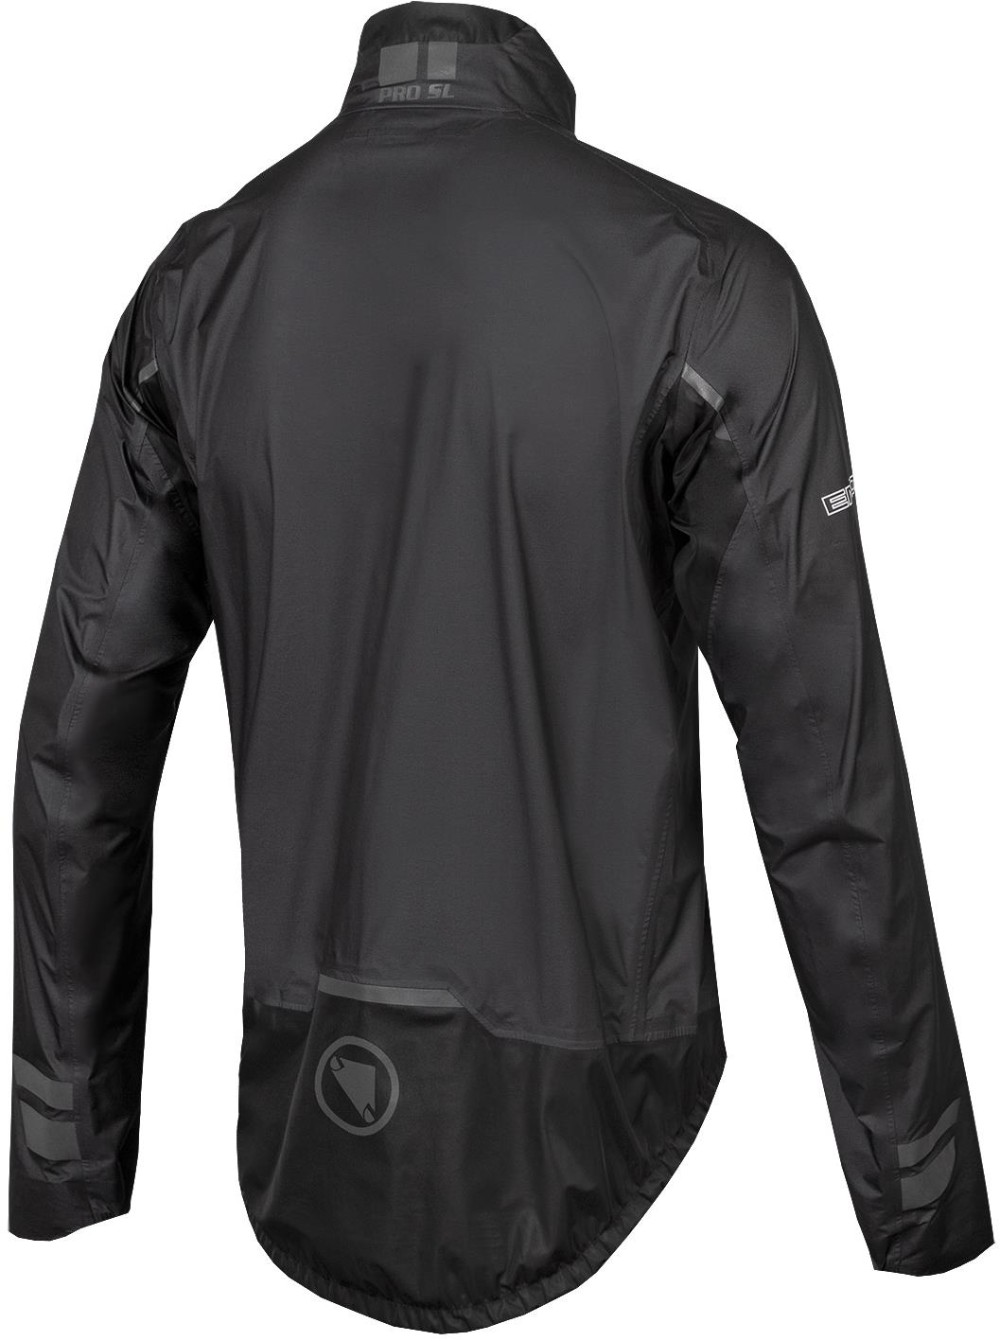 Pro SL Waterproof Shell Jacket image 1